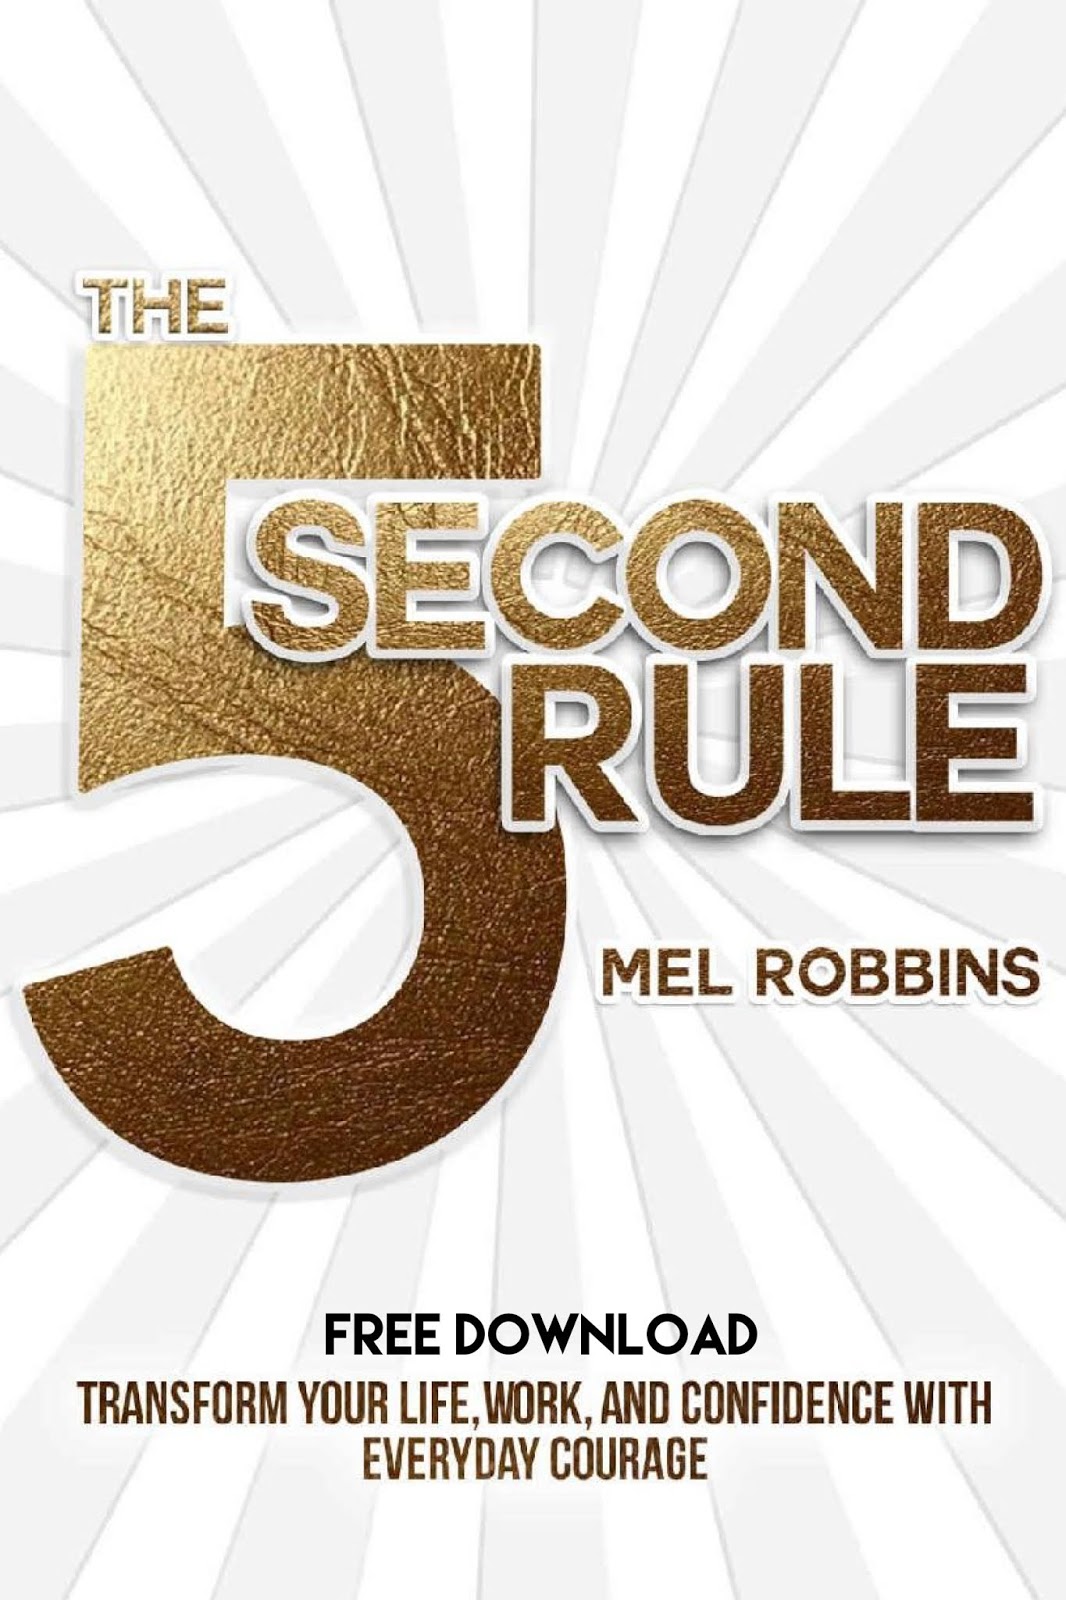 mel robbins book pdf free download